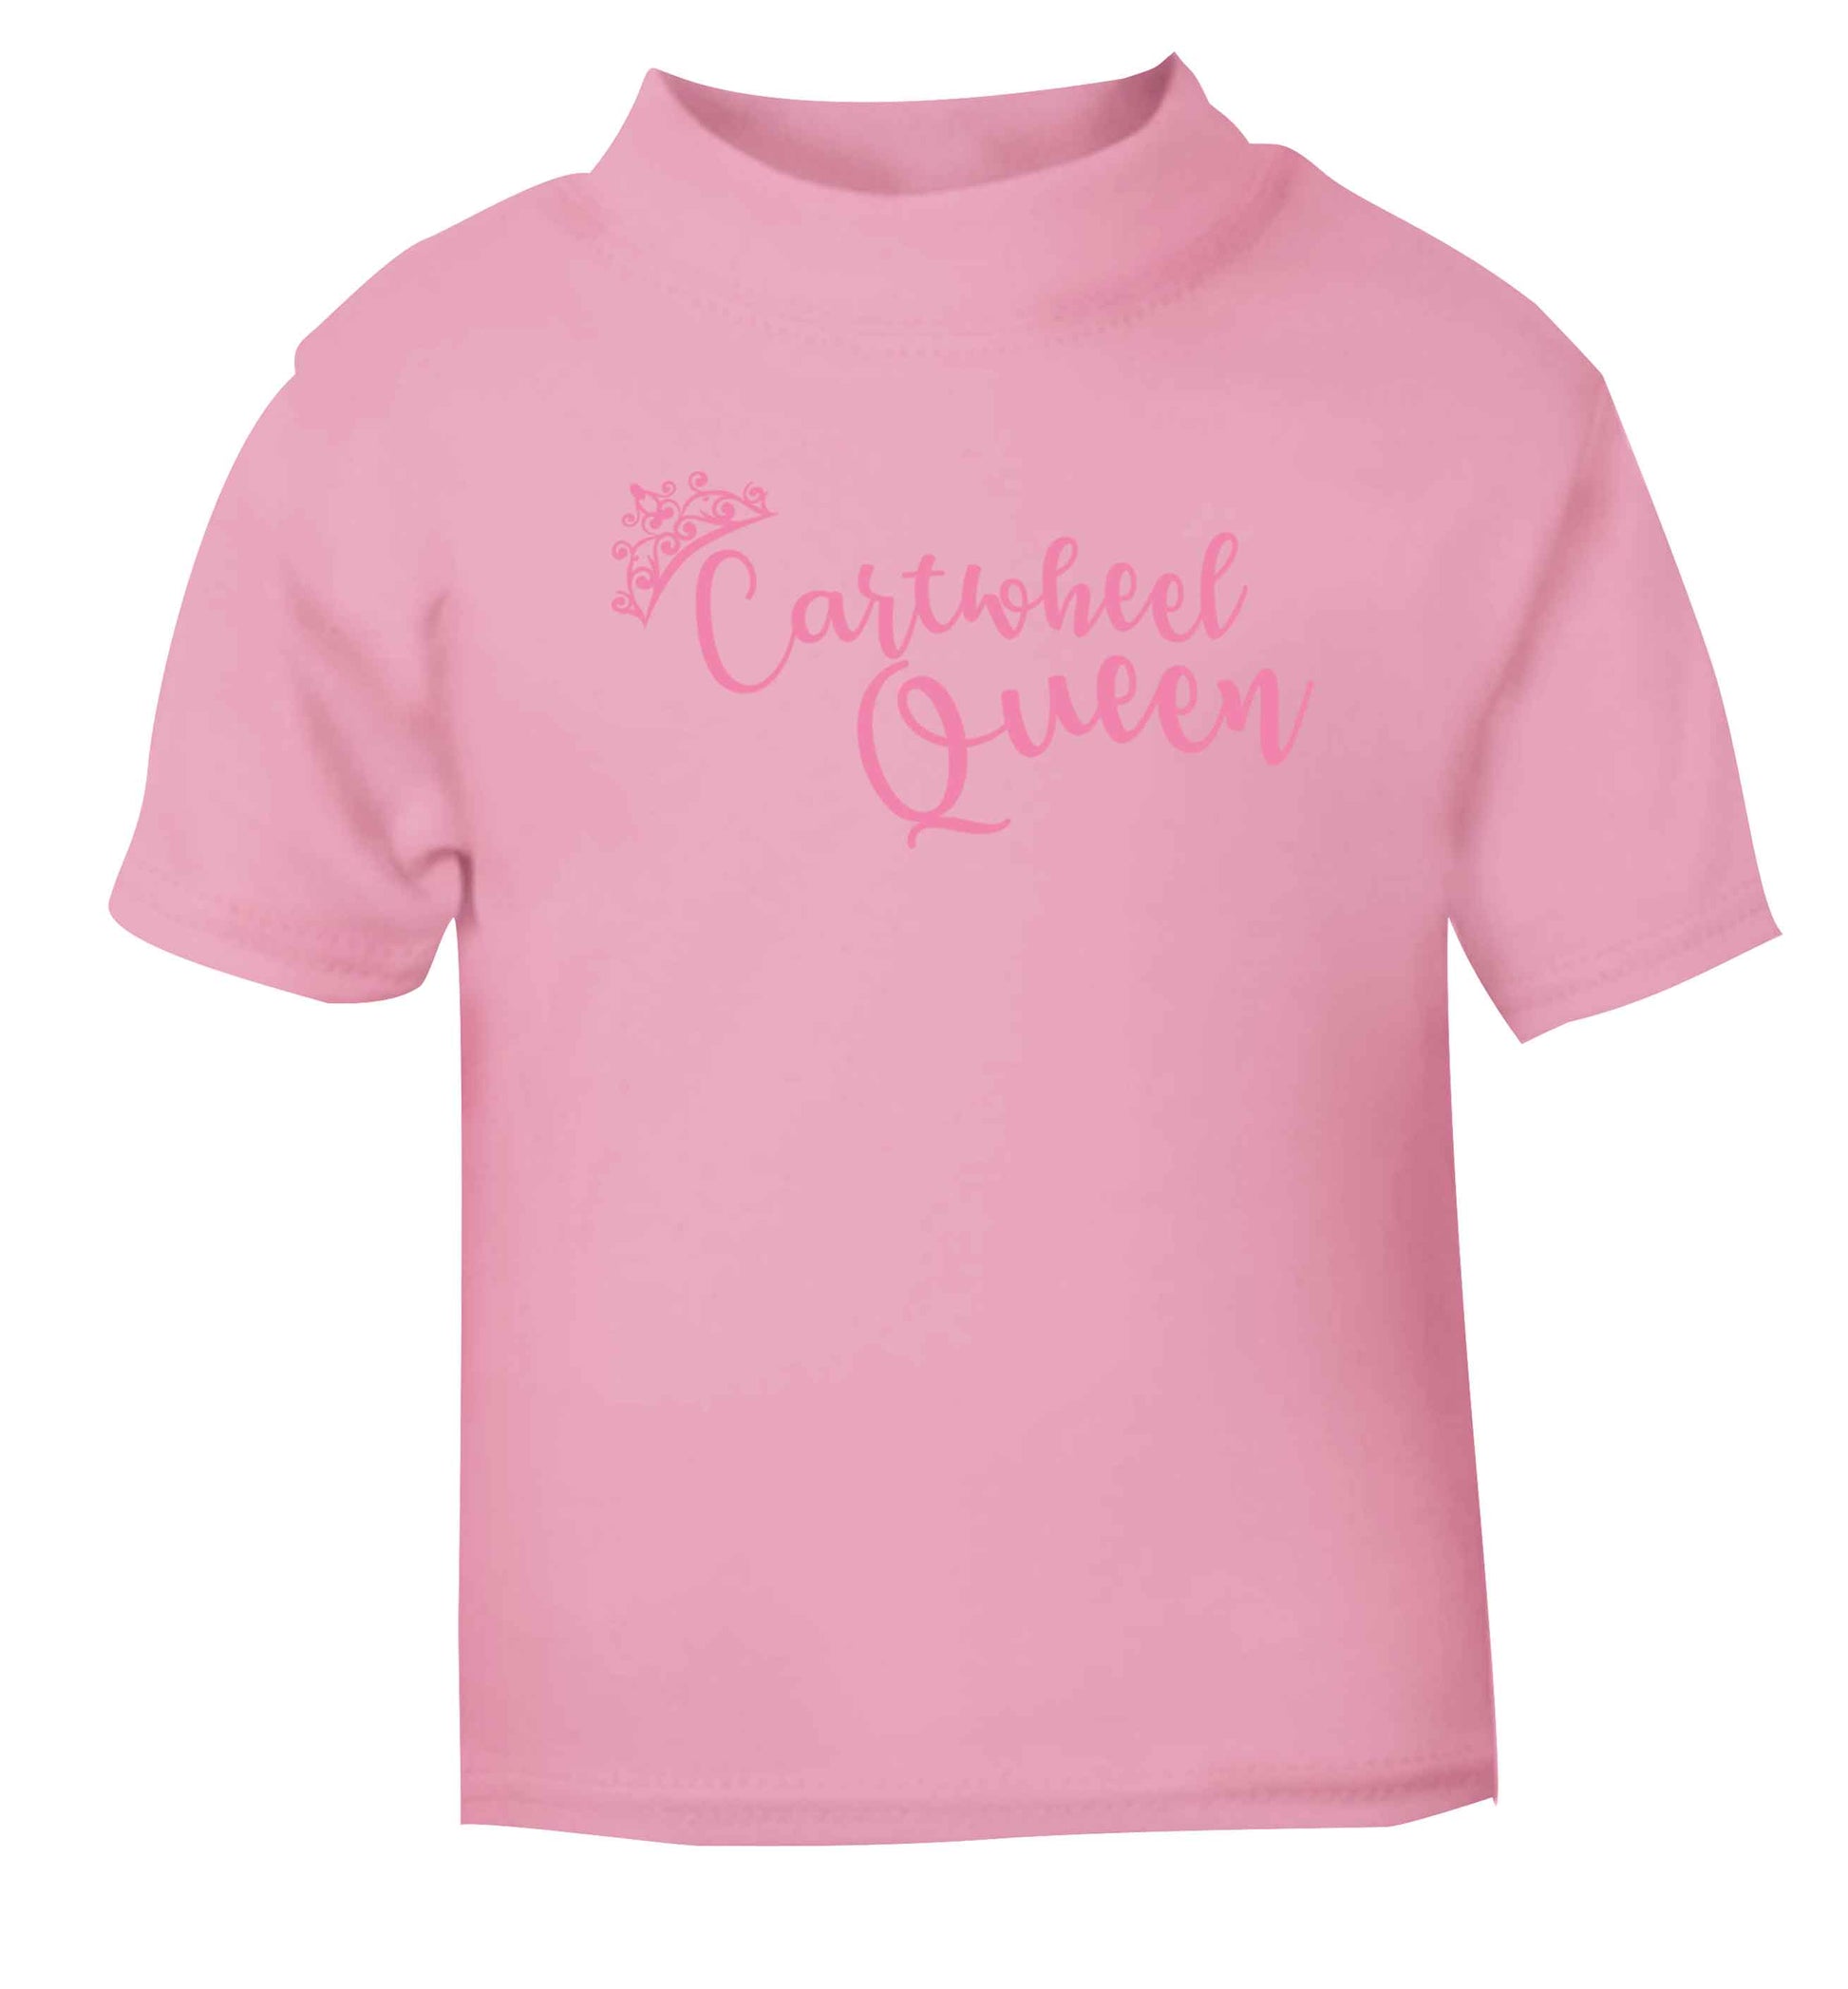 Cartwheel queen light pink Baby Toddler Tshirt 2 Years